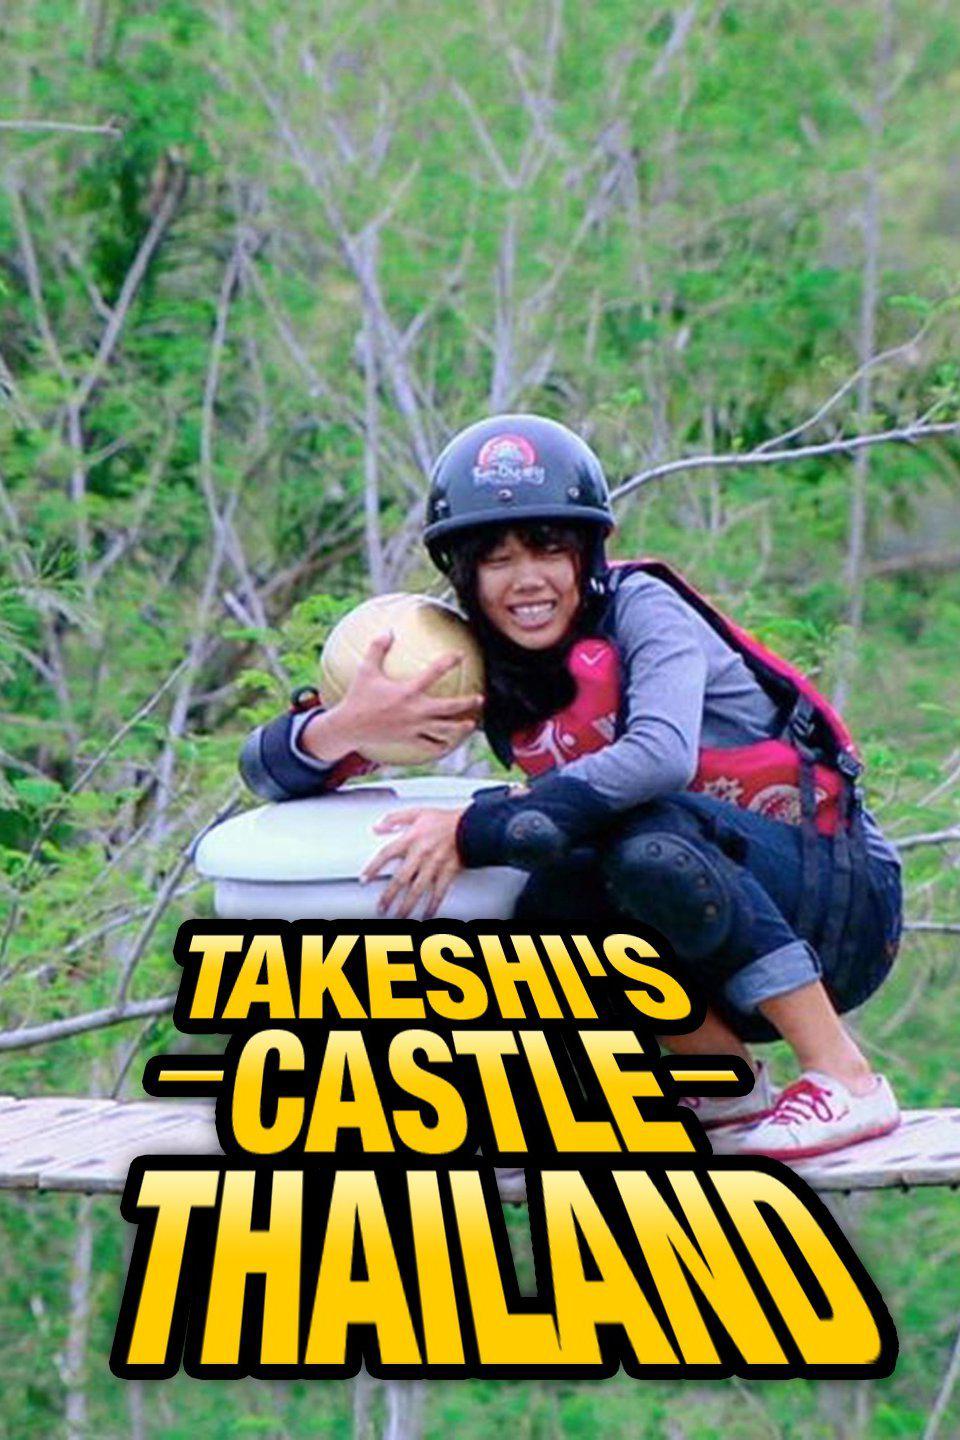 TV ratings for Takeshi's Castle Thailand in Corea del Sur. Challenge TV TV series